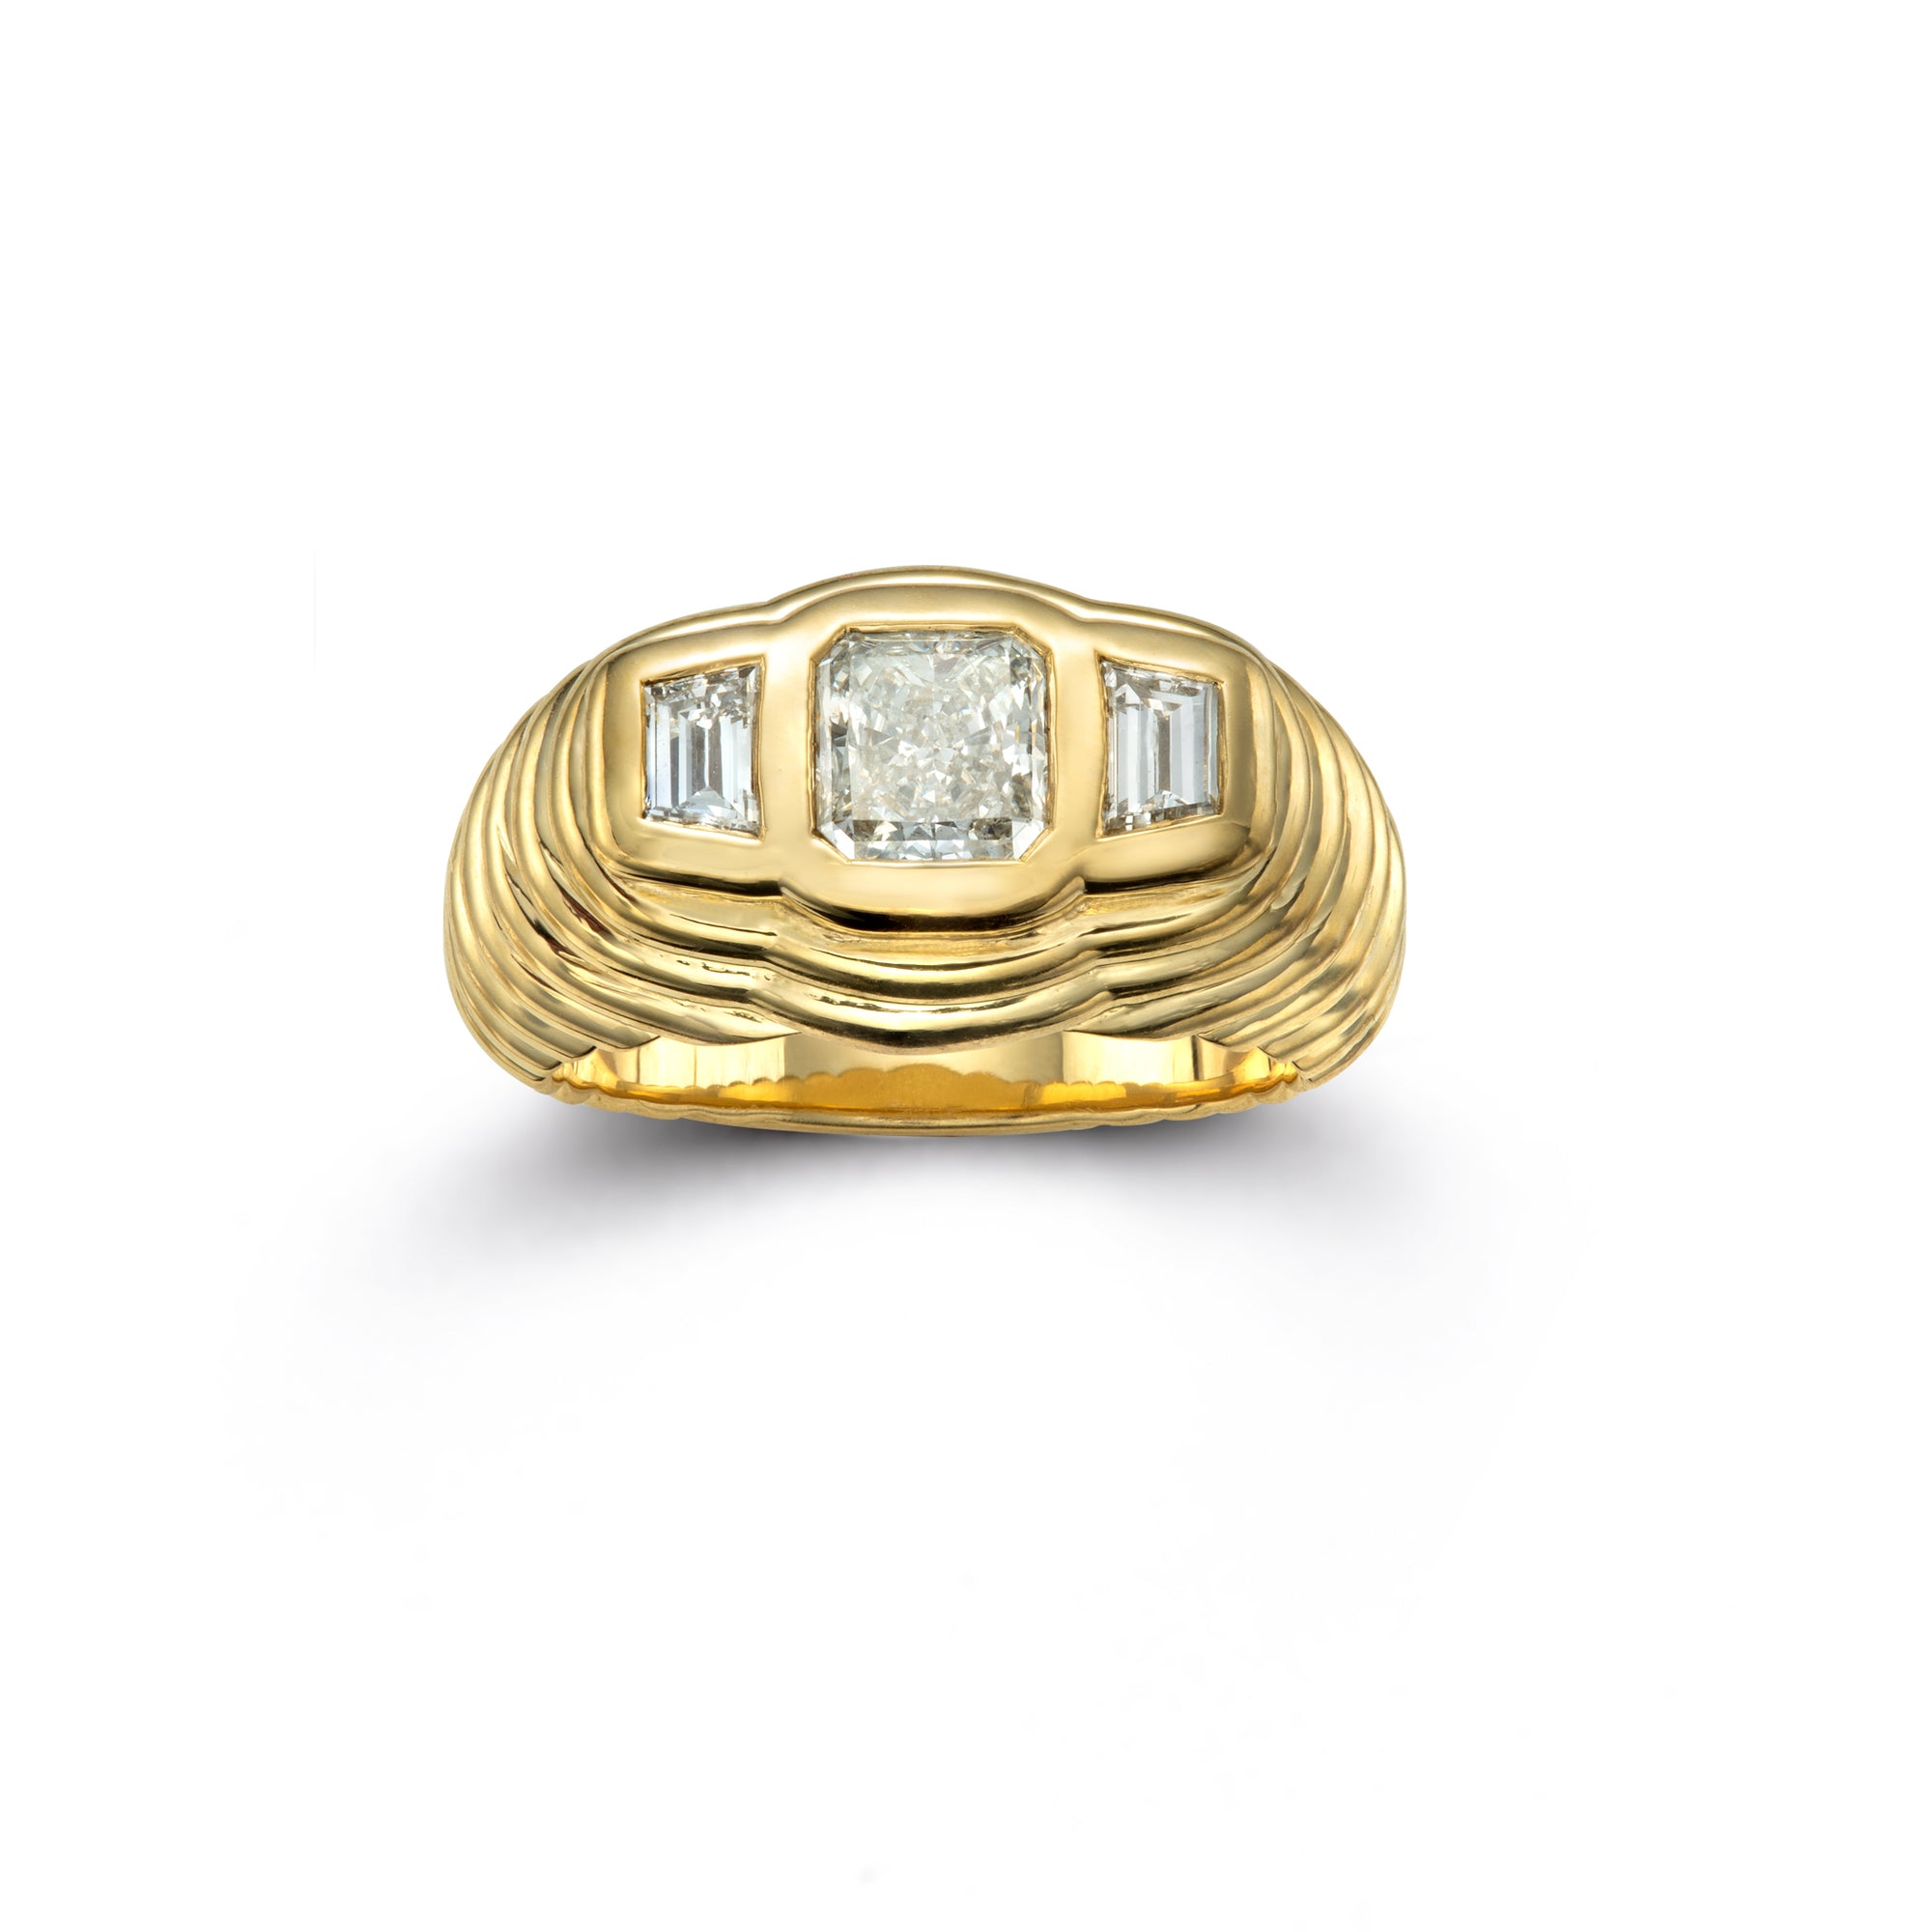 18k gold and diamonds art deco ring